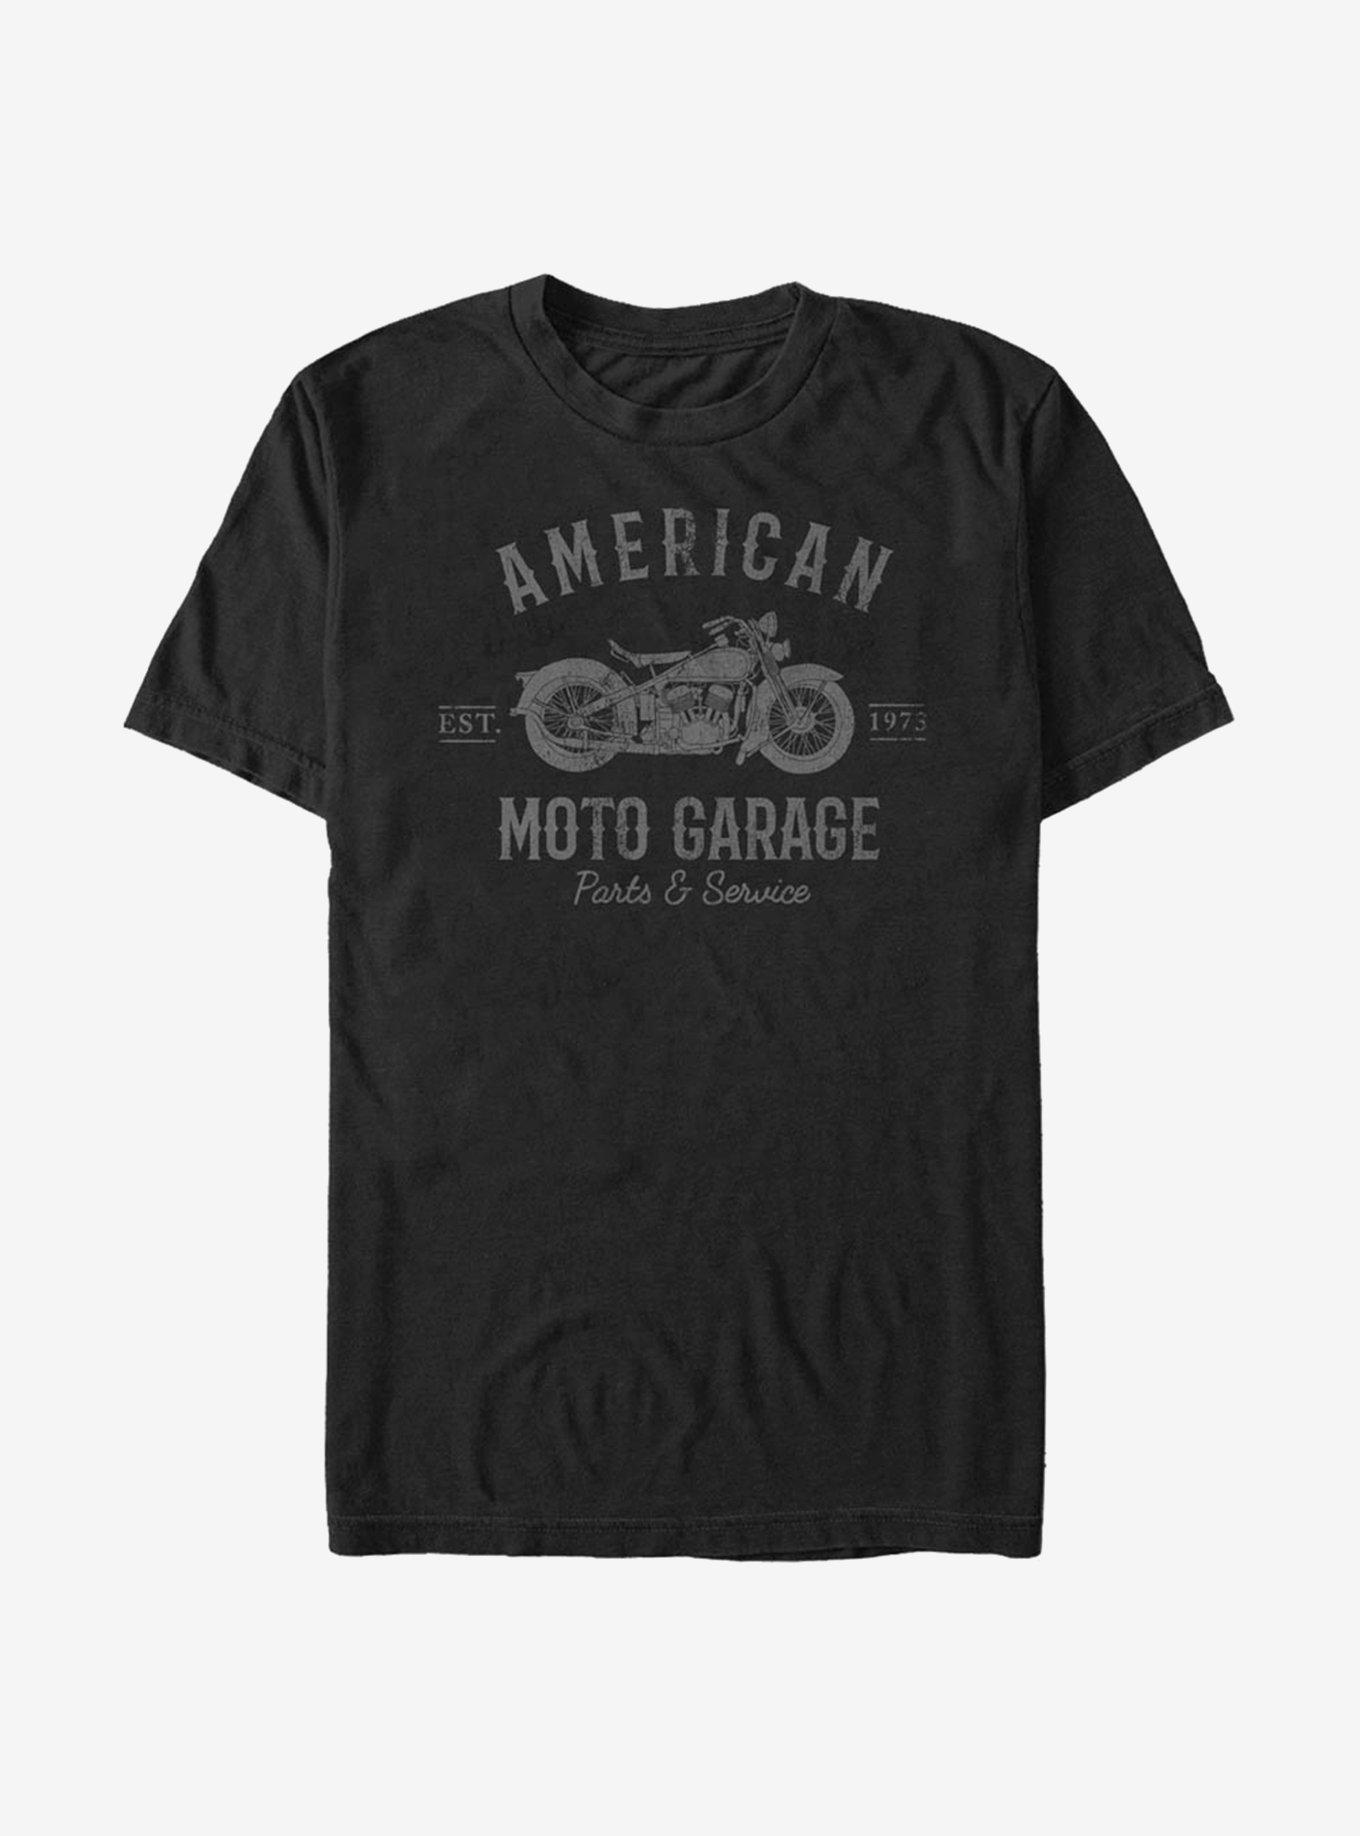 American Moto Garage T-Shirt